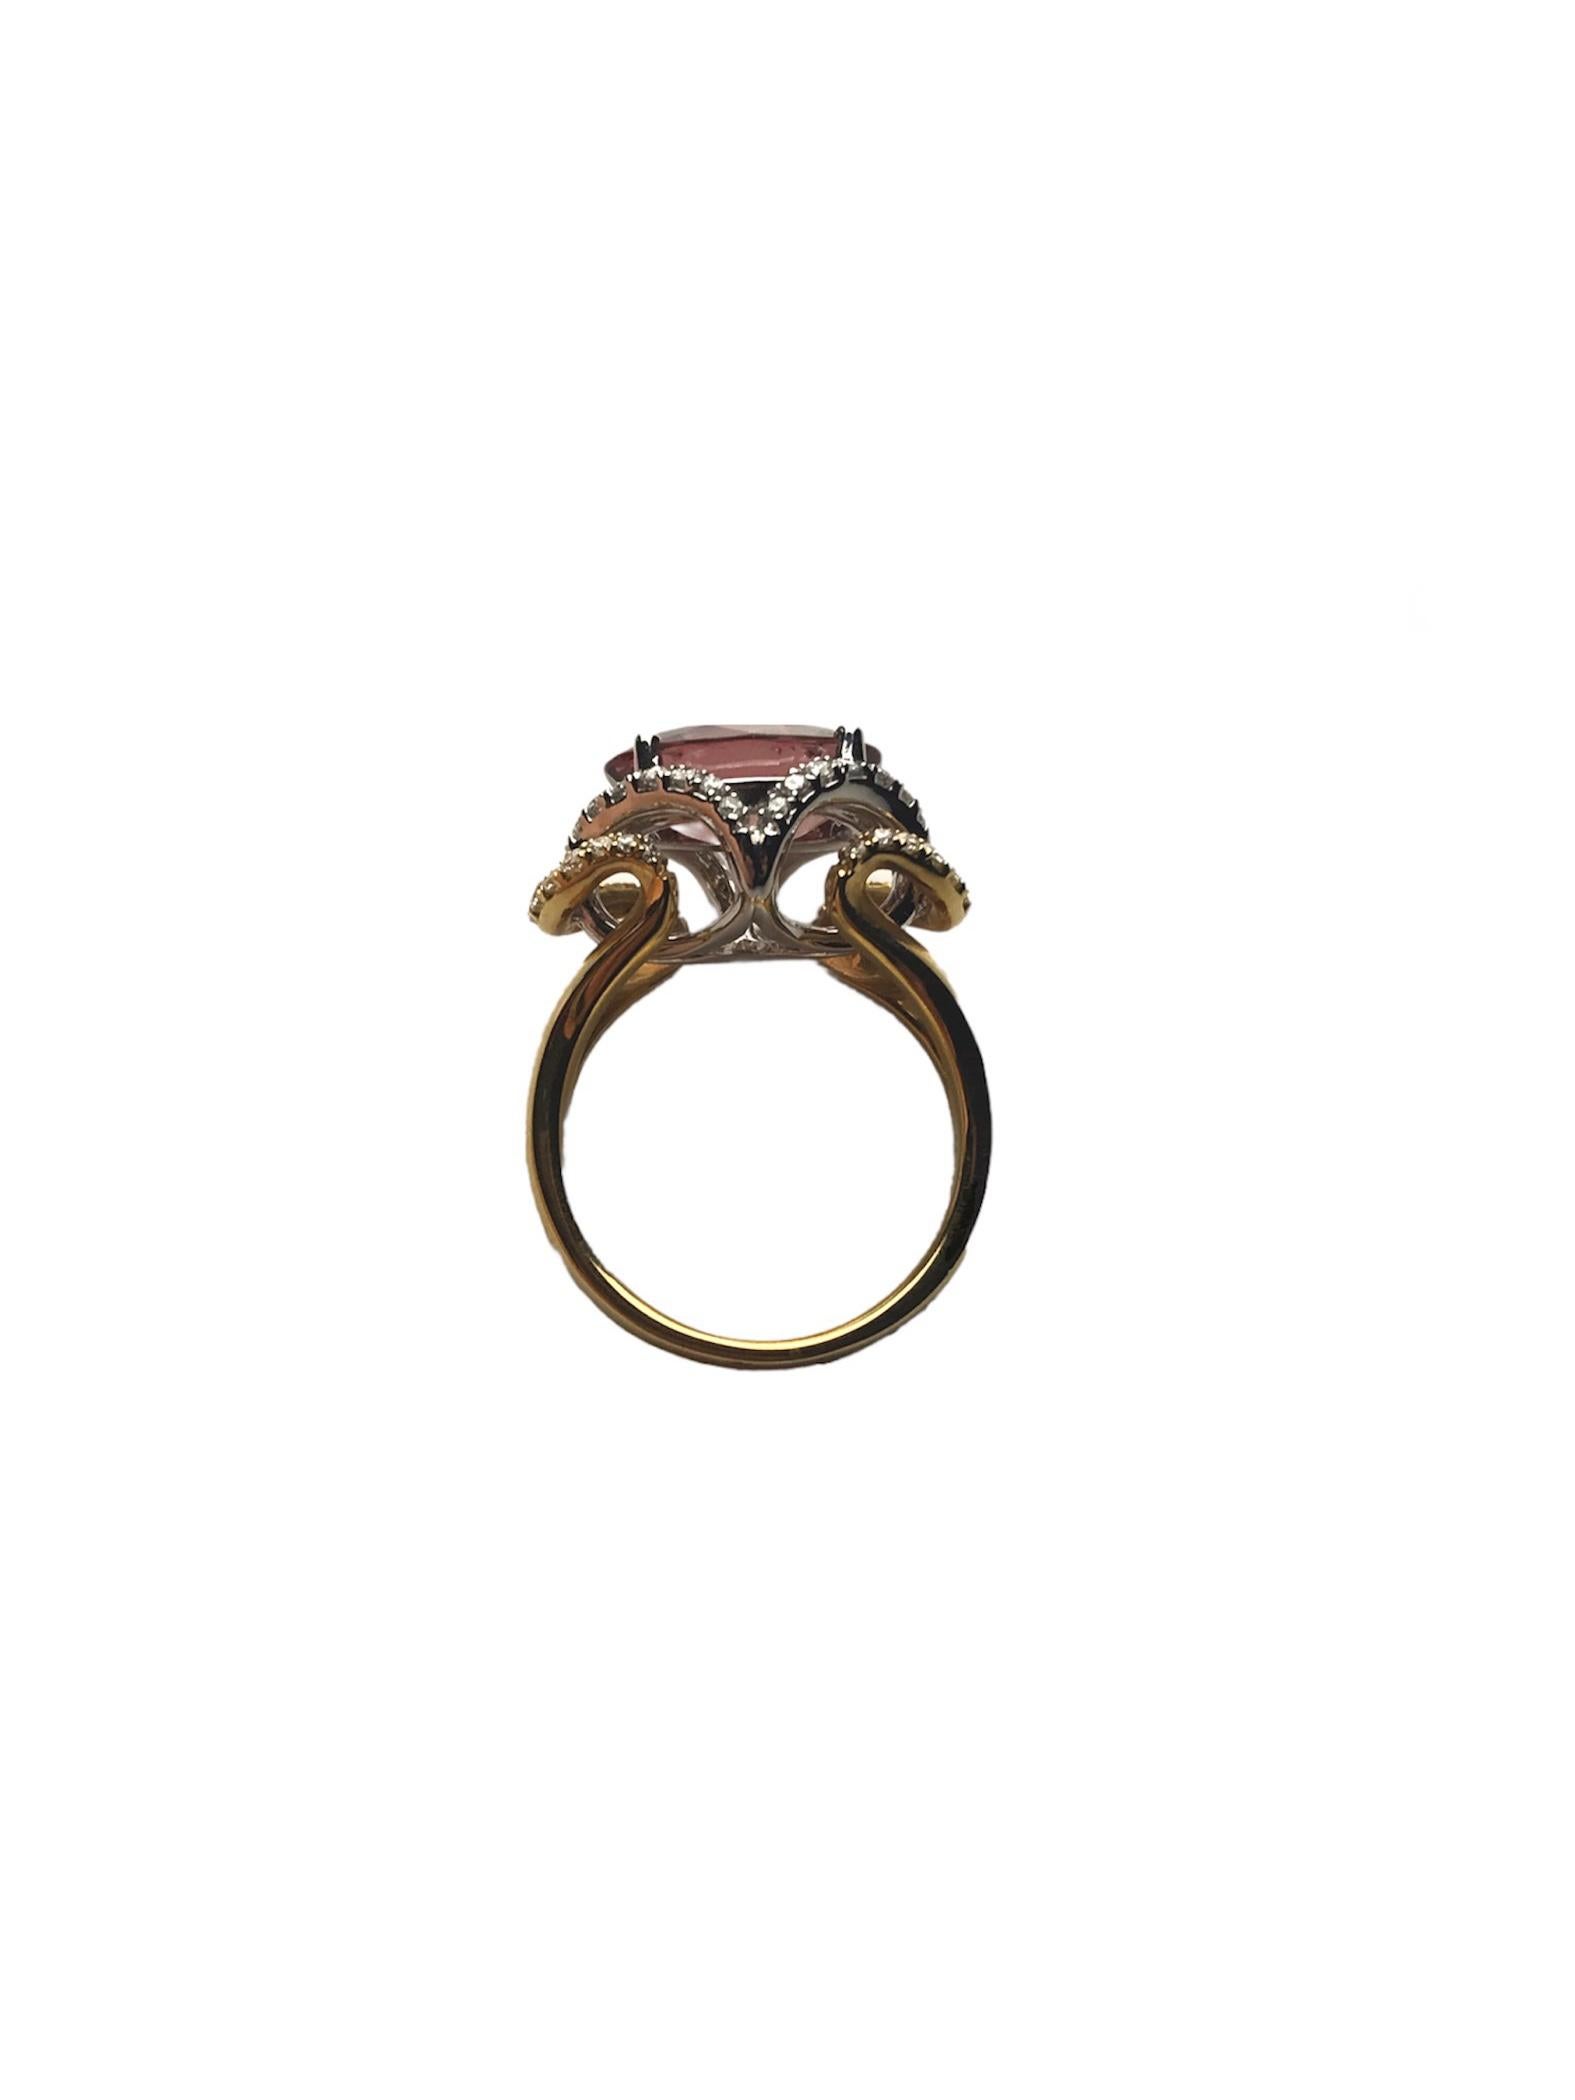 4.05 Carat Oval Cut Peach Garnet and Diamond Ring in 18k Y/W Gold ref990 For Sale 1